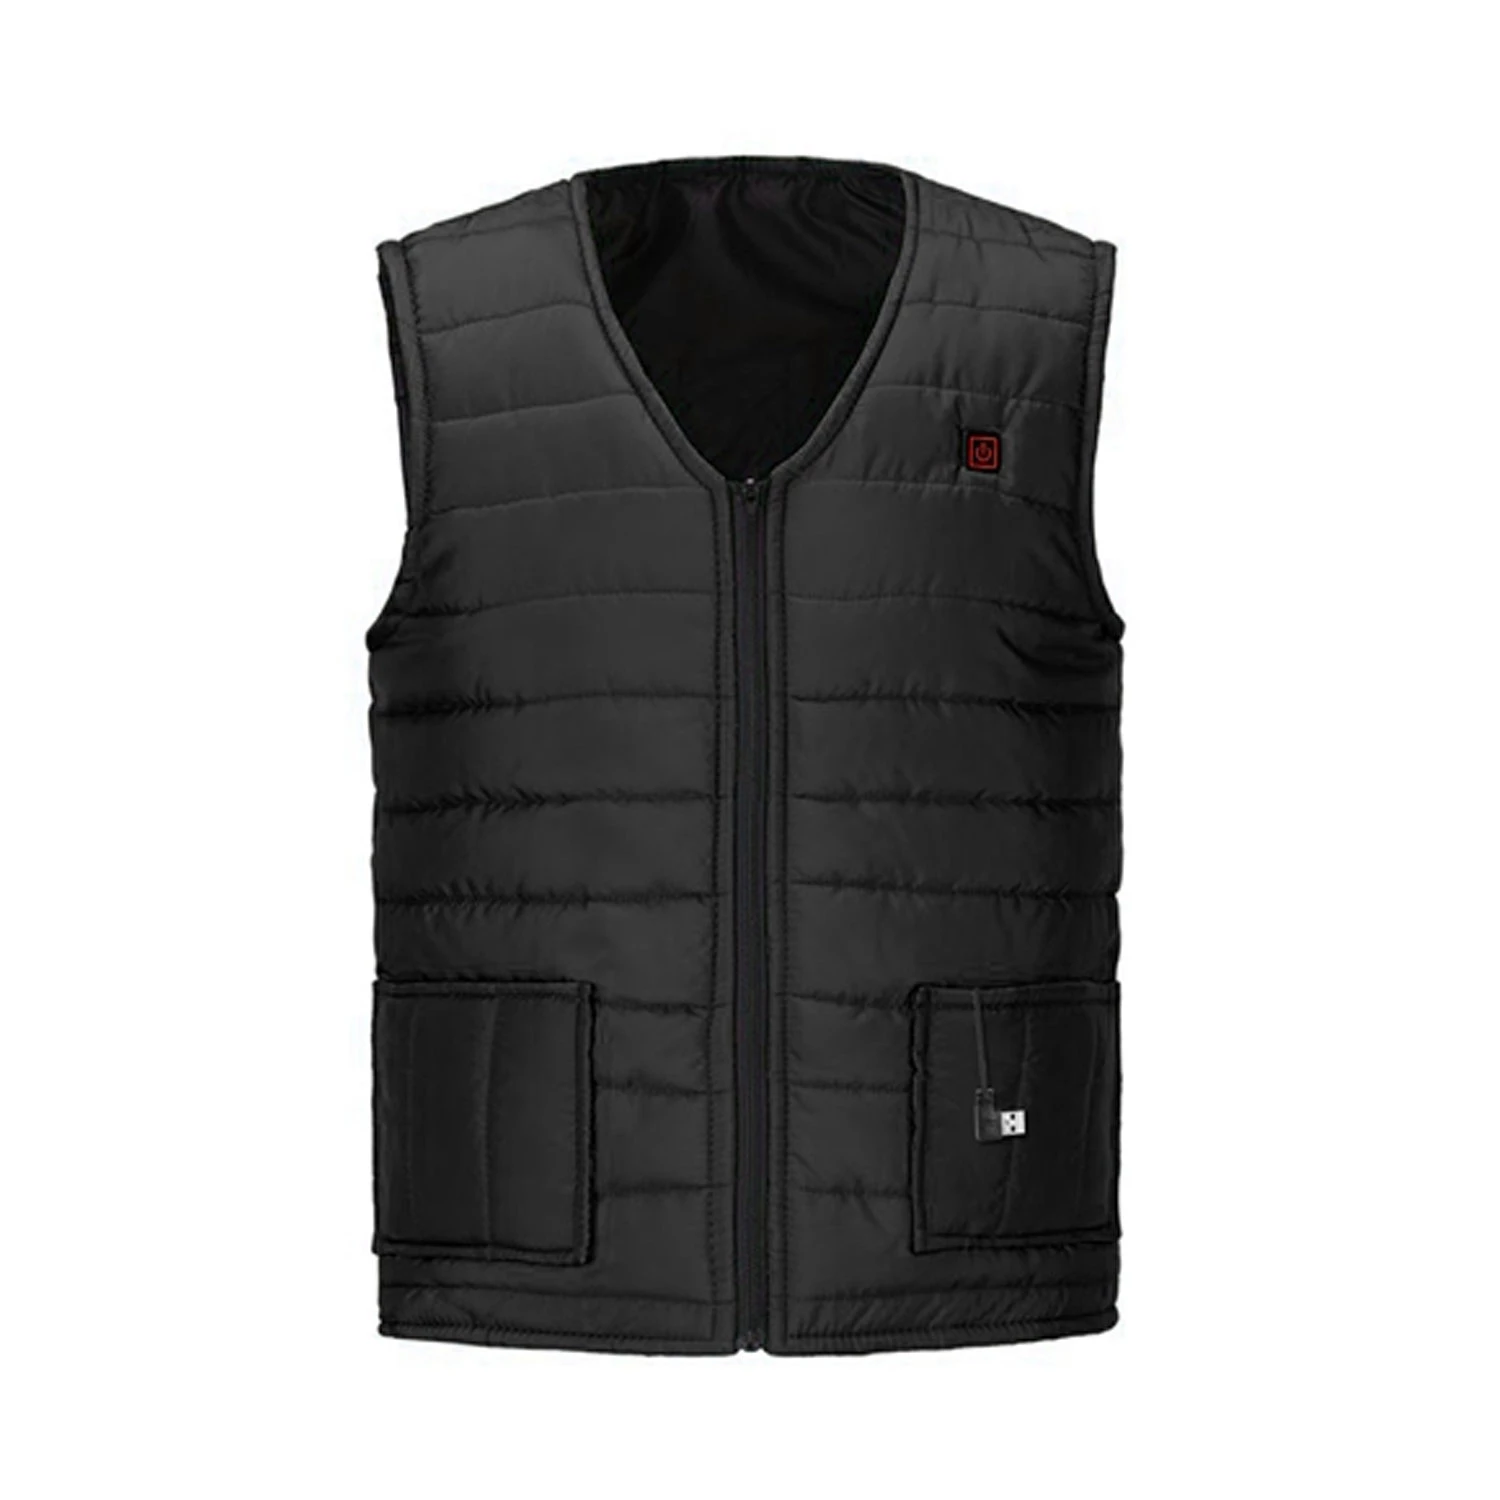 Heat Jacket Vest 3 Heating Gear Adjustable USB Heated Vest Warm Heat Coat Vest W/ 5 Heating Pads